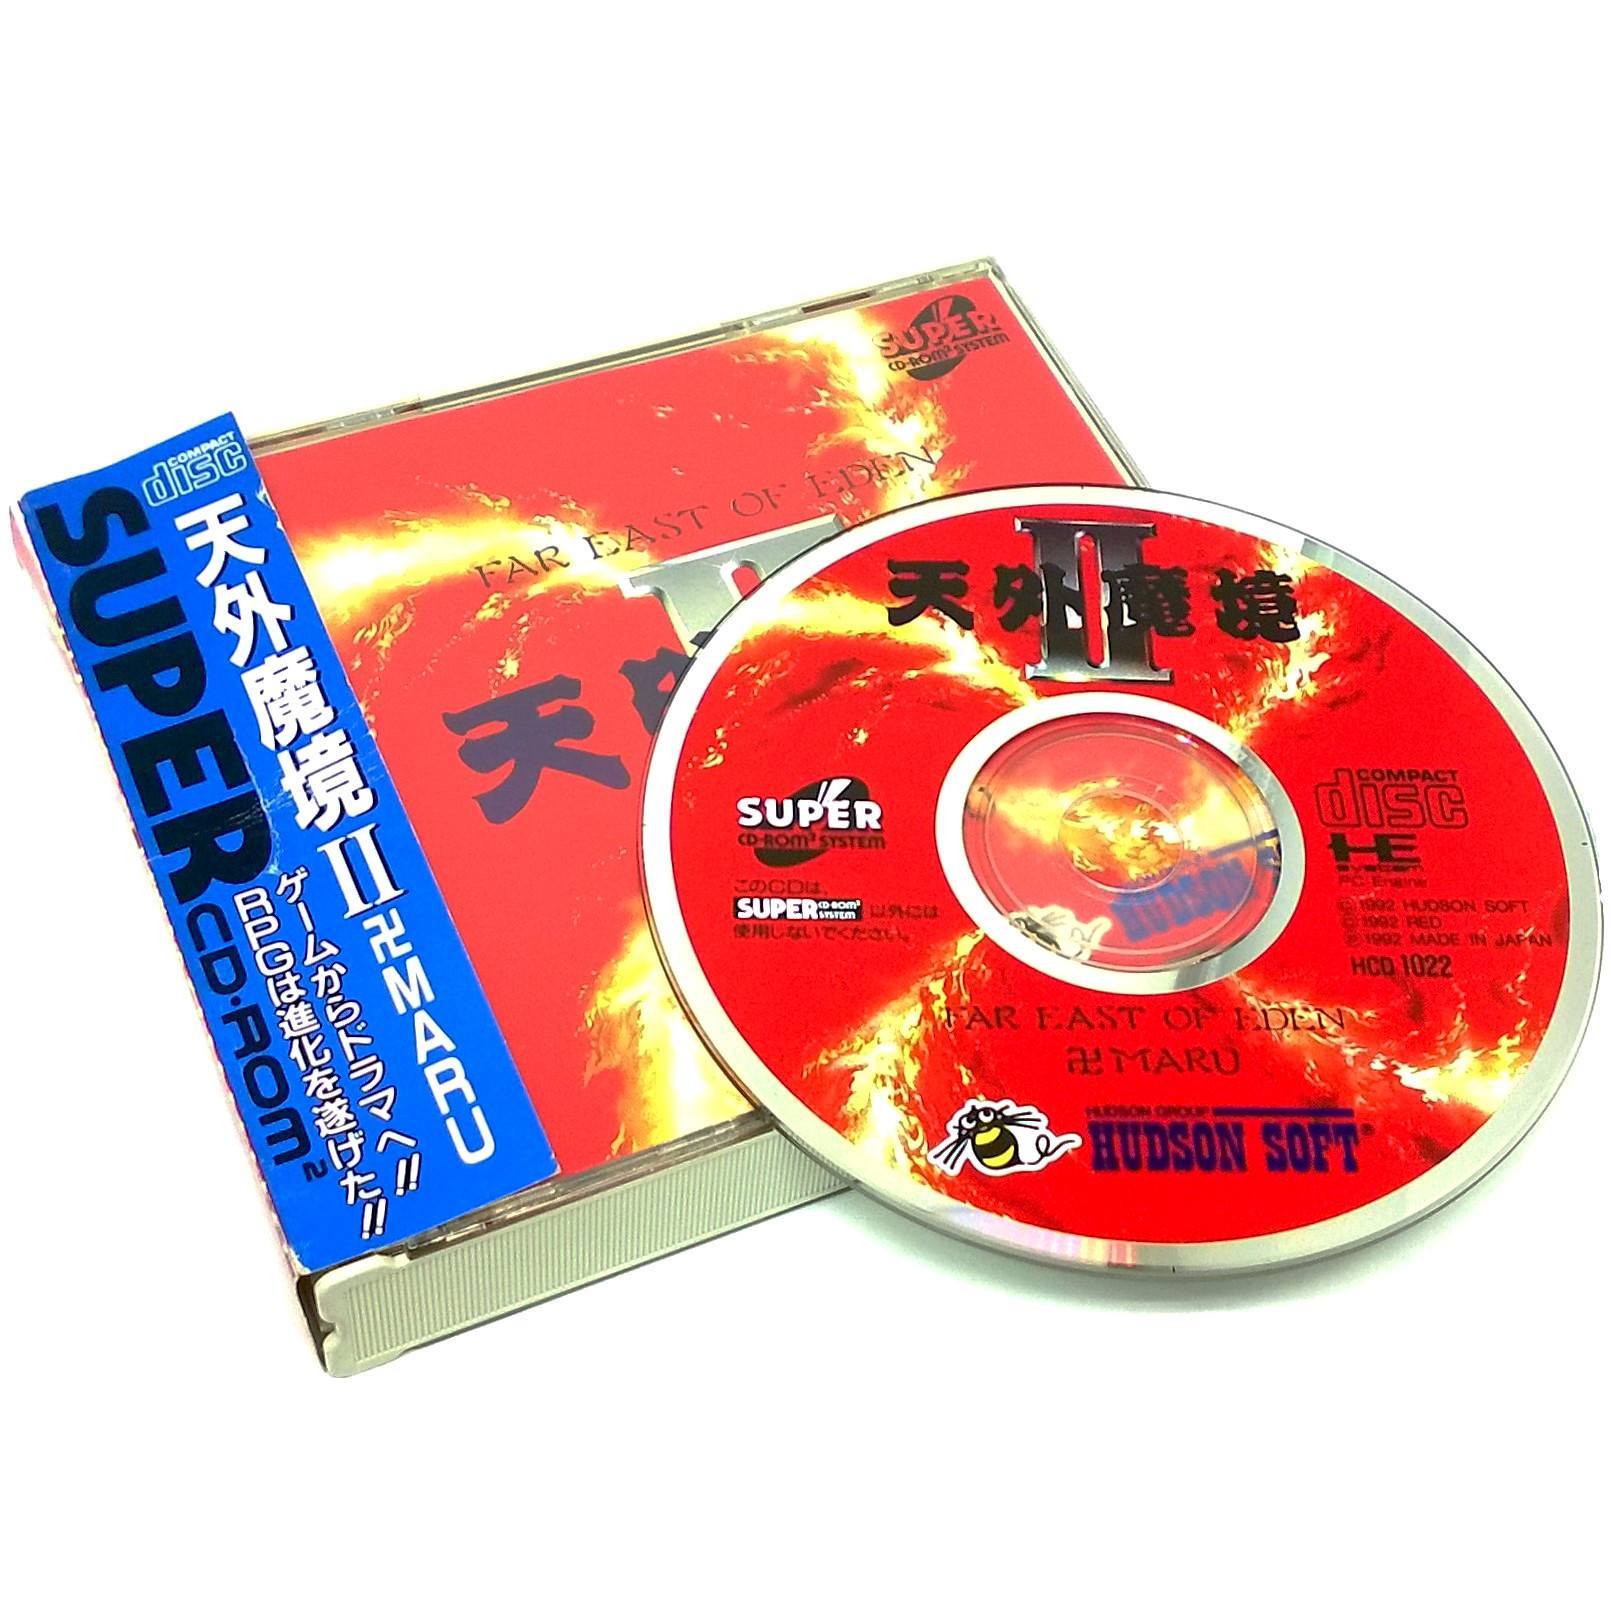 Far East of Eden II: Manji Maru for PC Engine (Super CD)